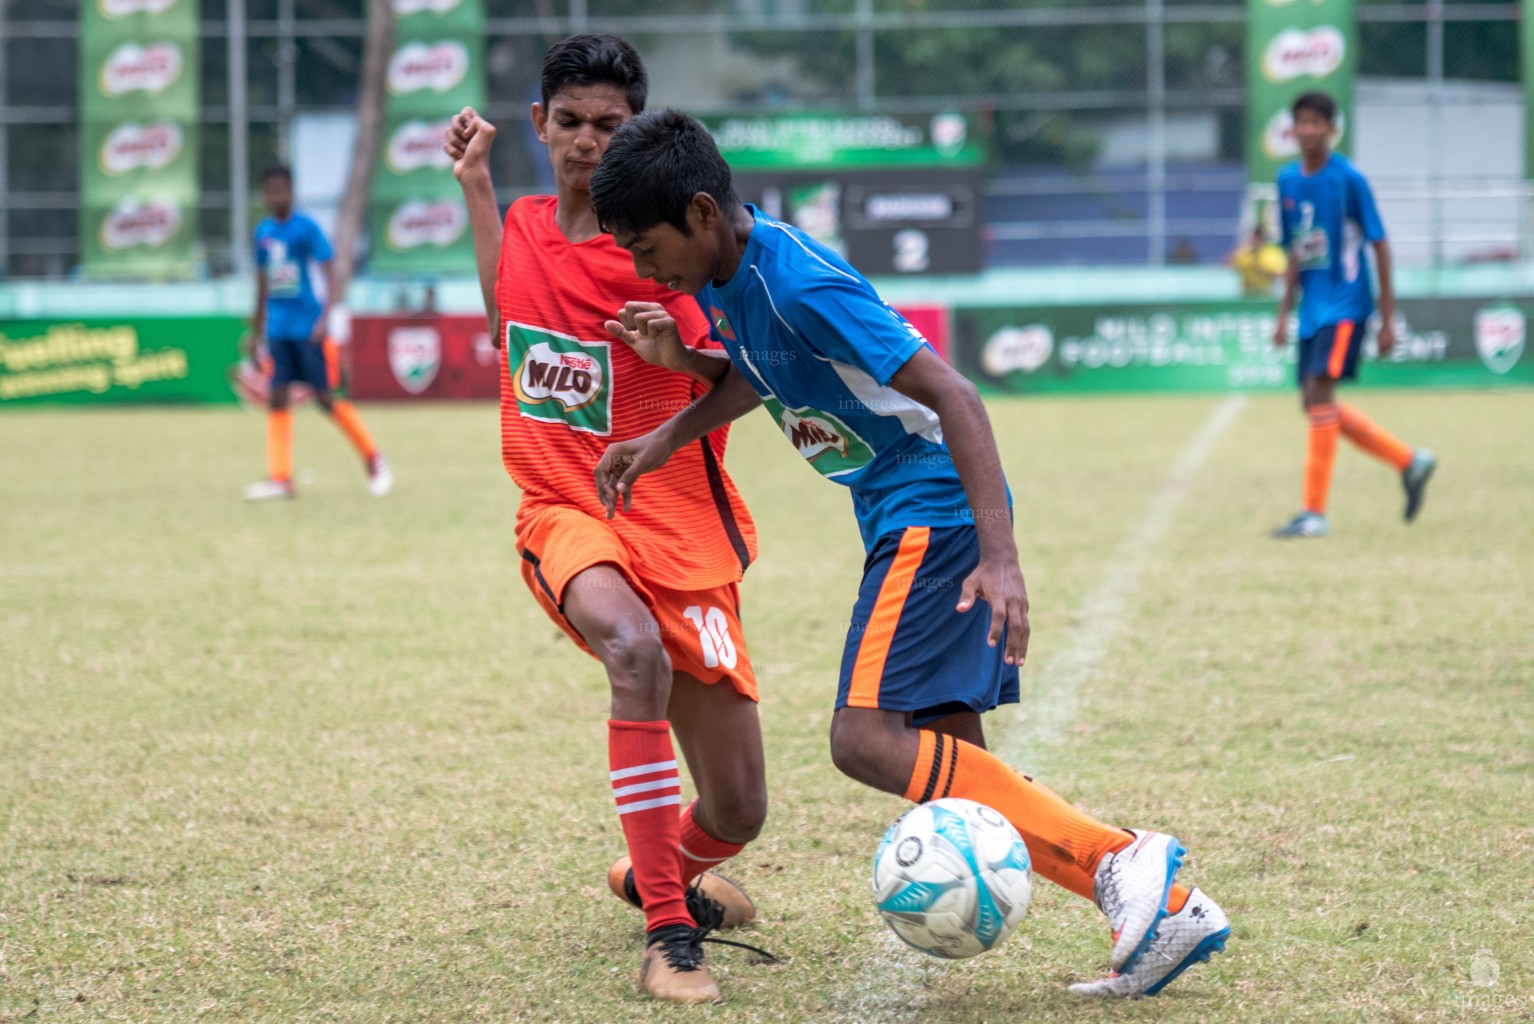 Milo Inter-school Football Tournament- Under 14 Ghaazee School vs Imaduddin School In Henveiru Stadium at 1630. Monday 12th March 2018 in Male' Maldives. Images.mv Photo/ Abdulla Abeedh